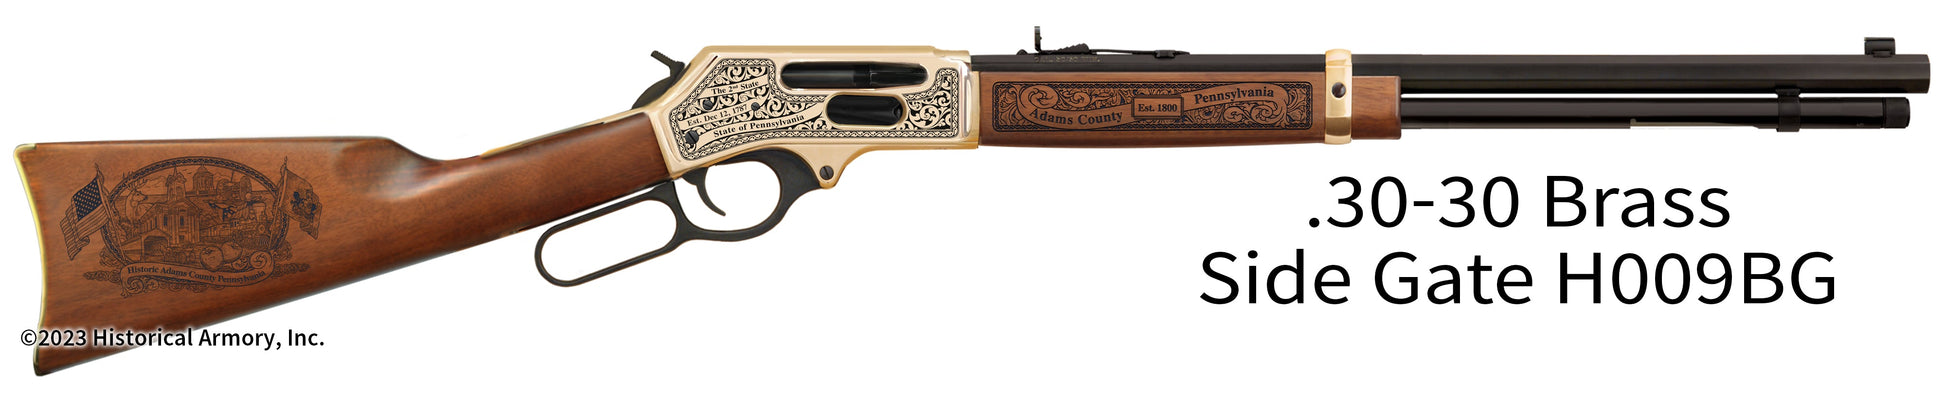 Adams County Pennsylvania Engraved Henry .30-30 Brass Side Gate Rifle